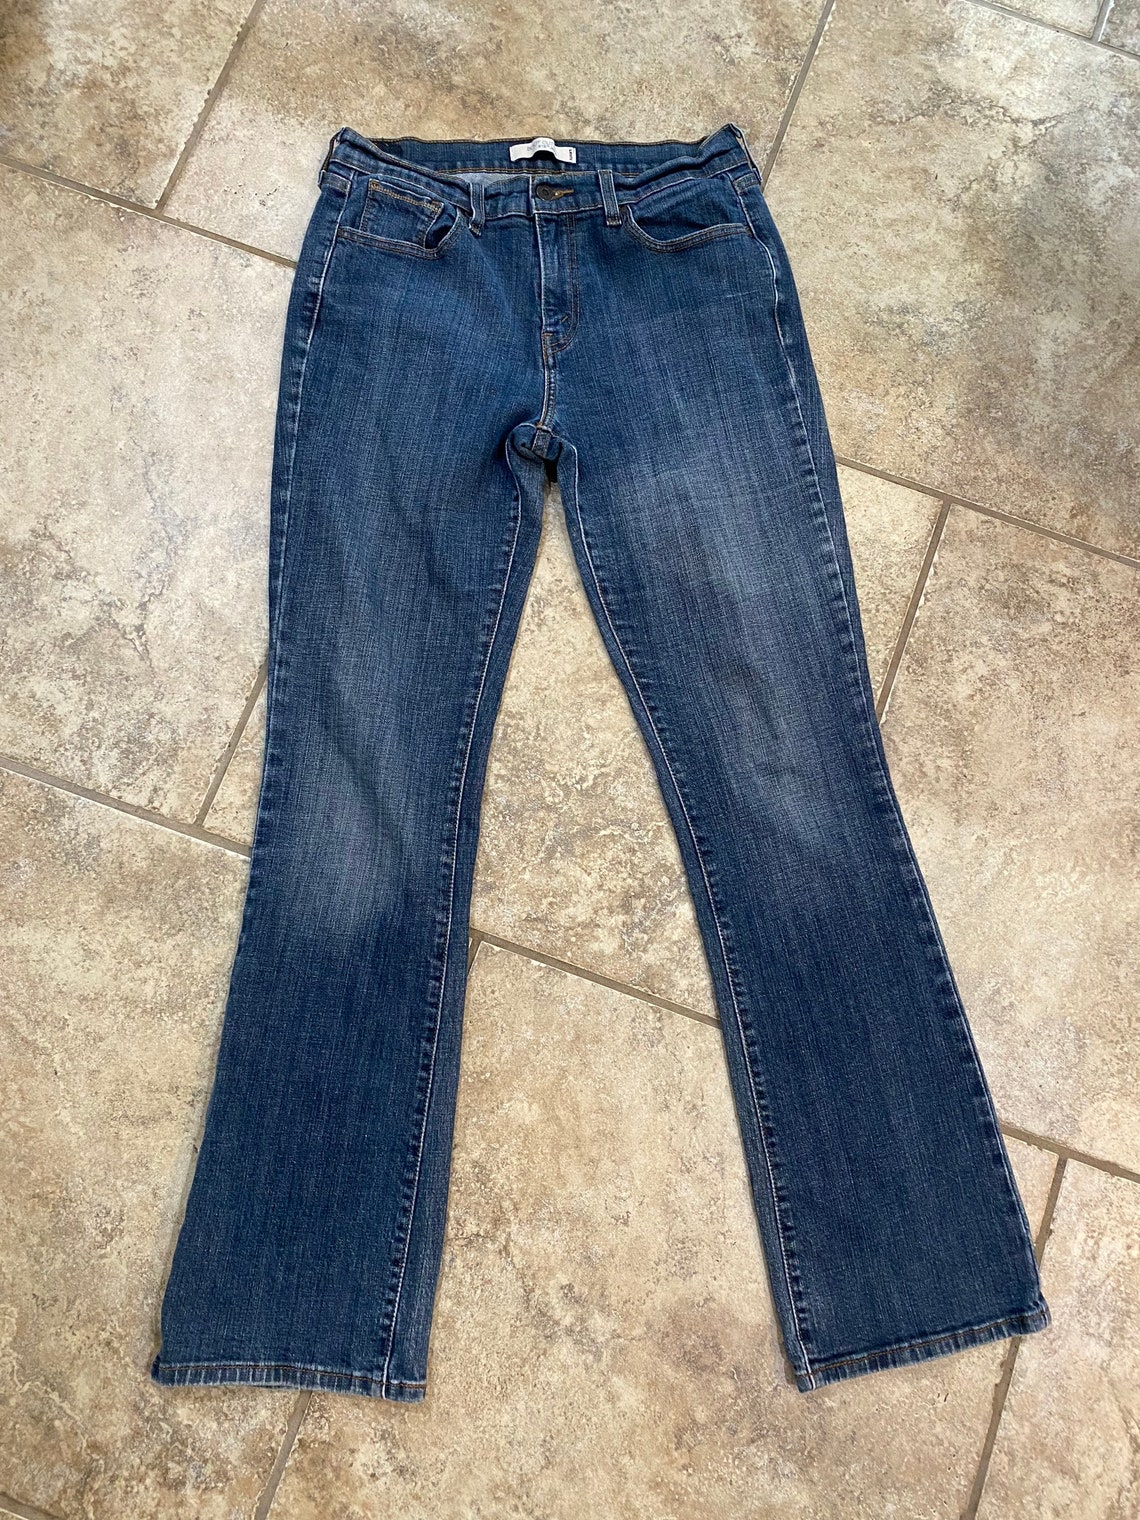 Levi Strauss Levis 515 boot cut womens medium wash jeans | Etsy